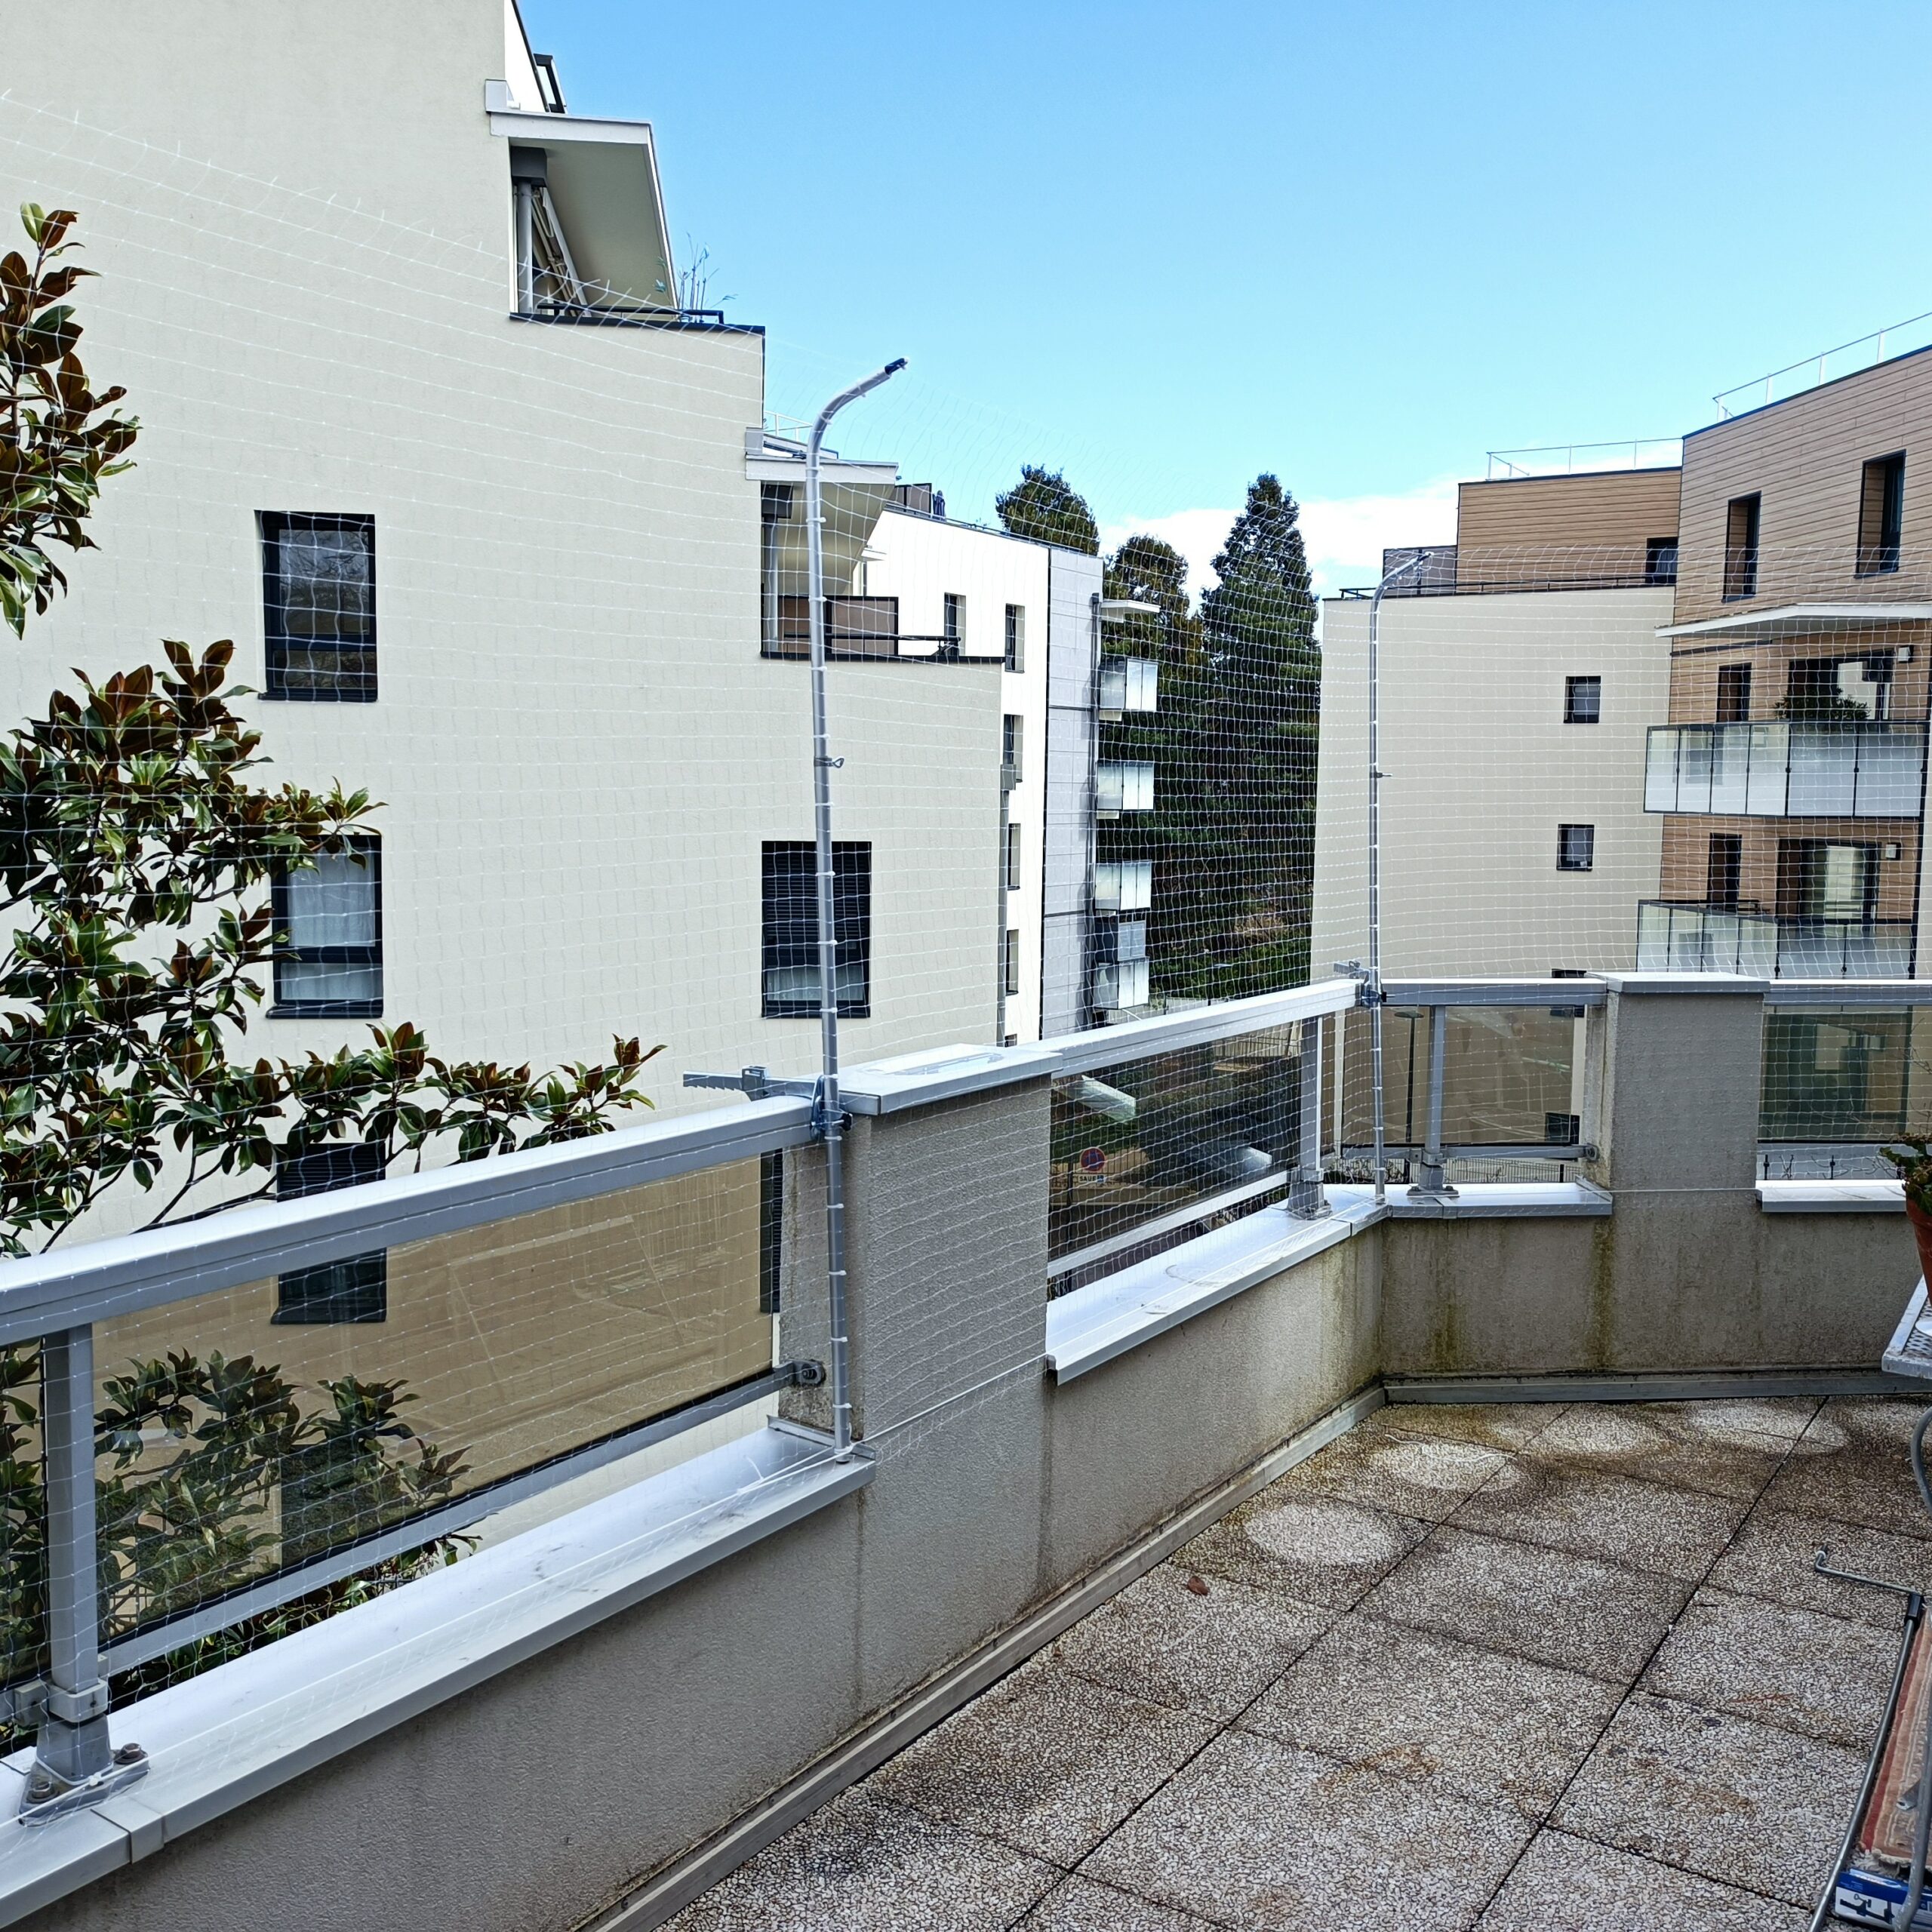 Installation de filets de protection anti chute sur balcon